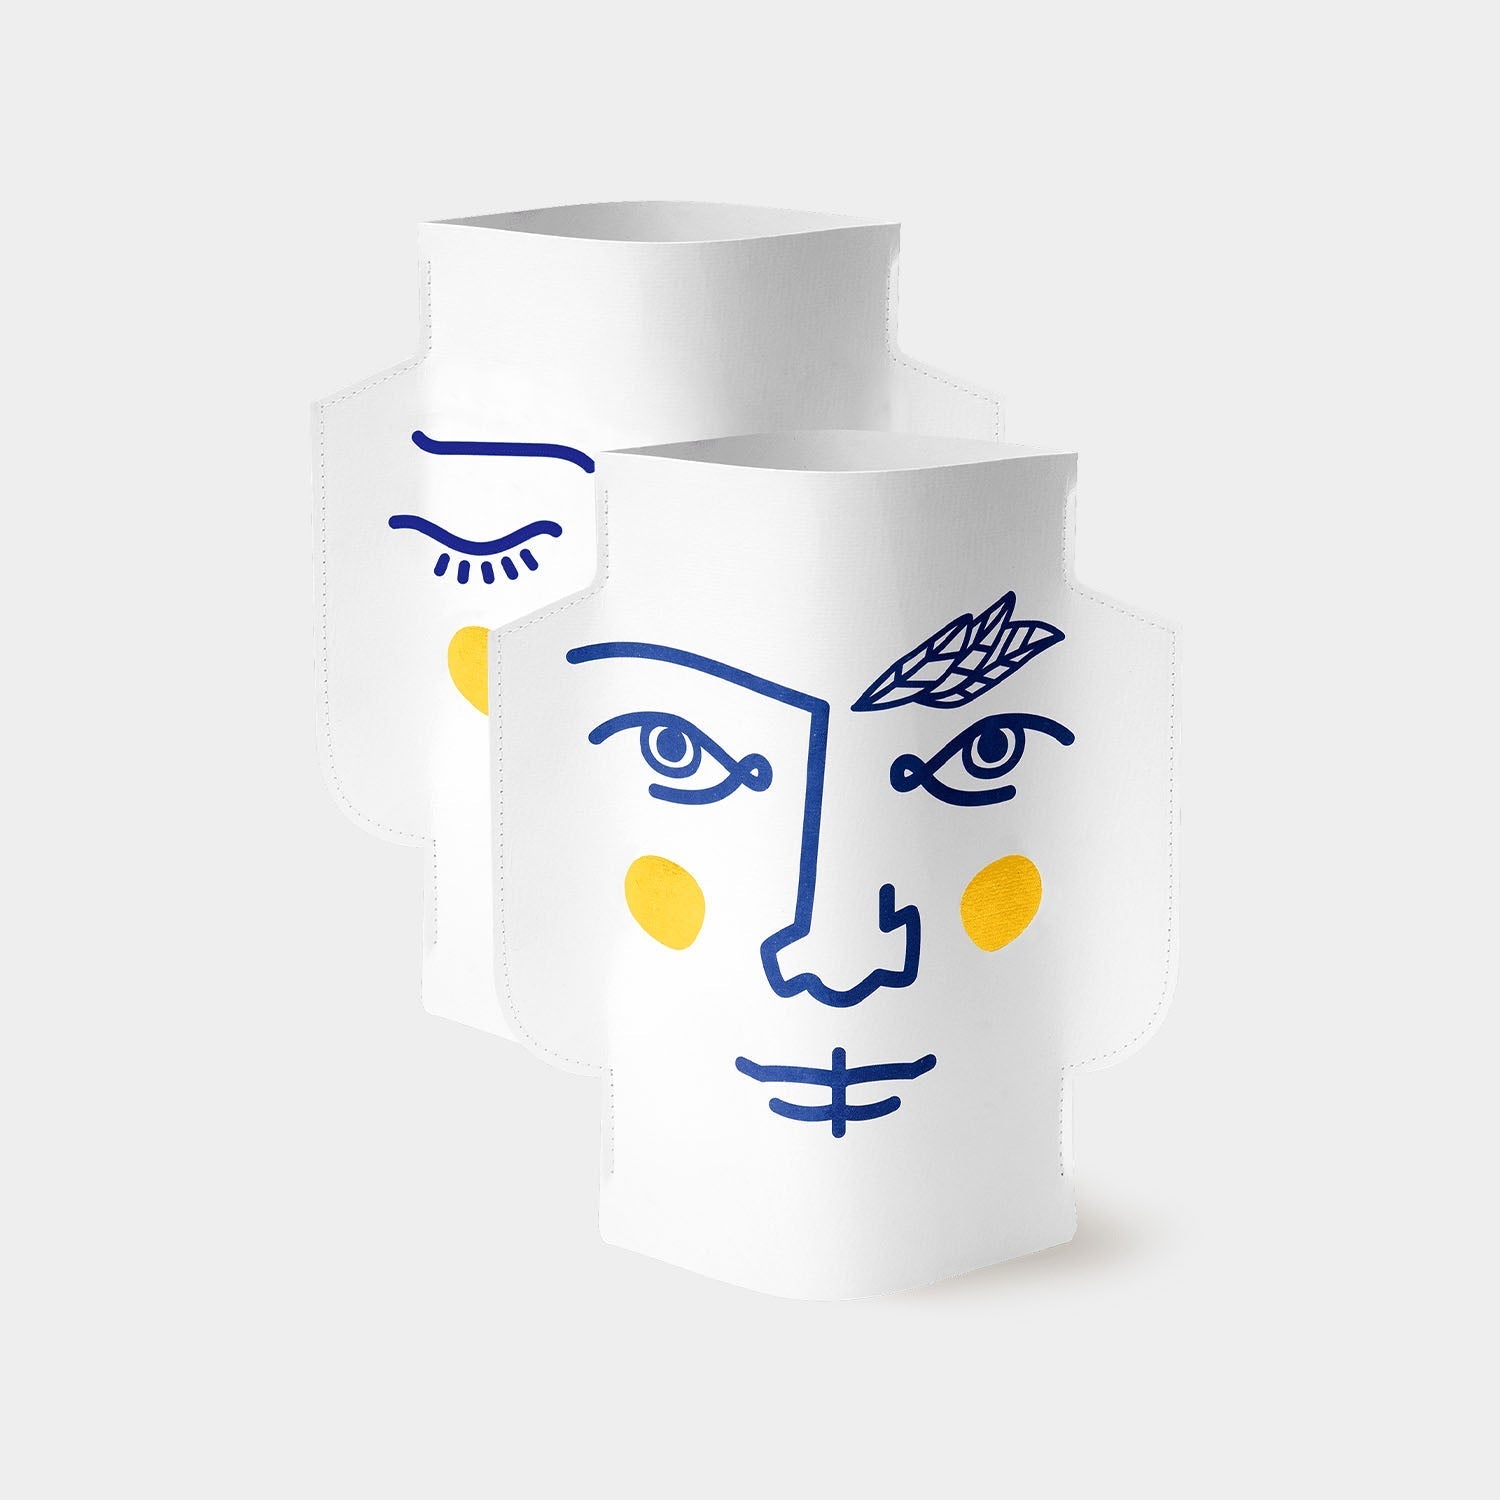 Paper Vase Janus by OCTAEVO